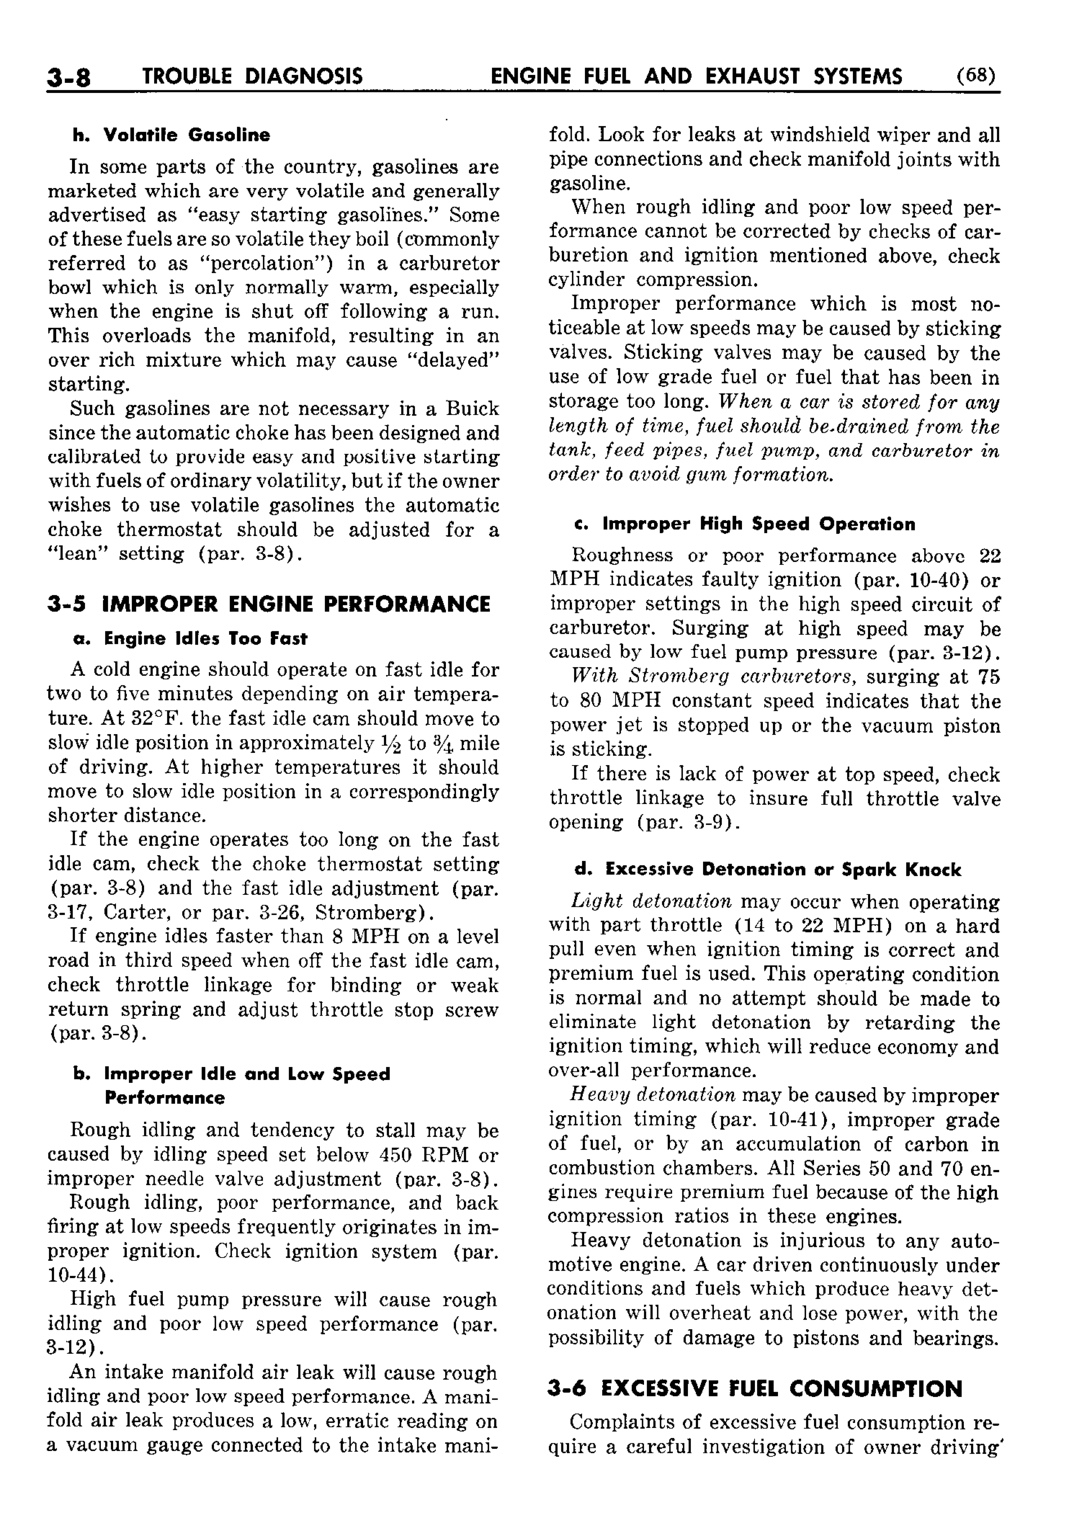 n_04 1953 Buick Shop Manual - Engine Fuel & Exhaust-008-008.jpg